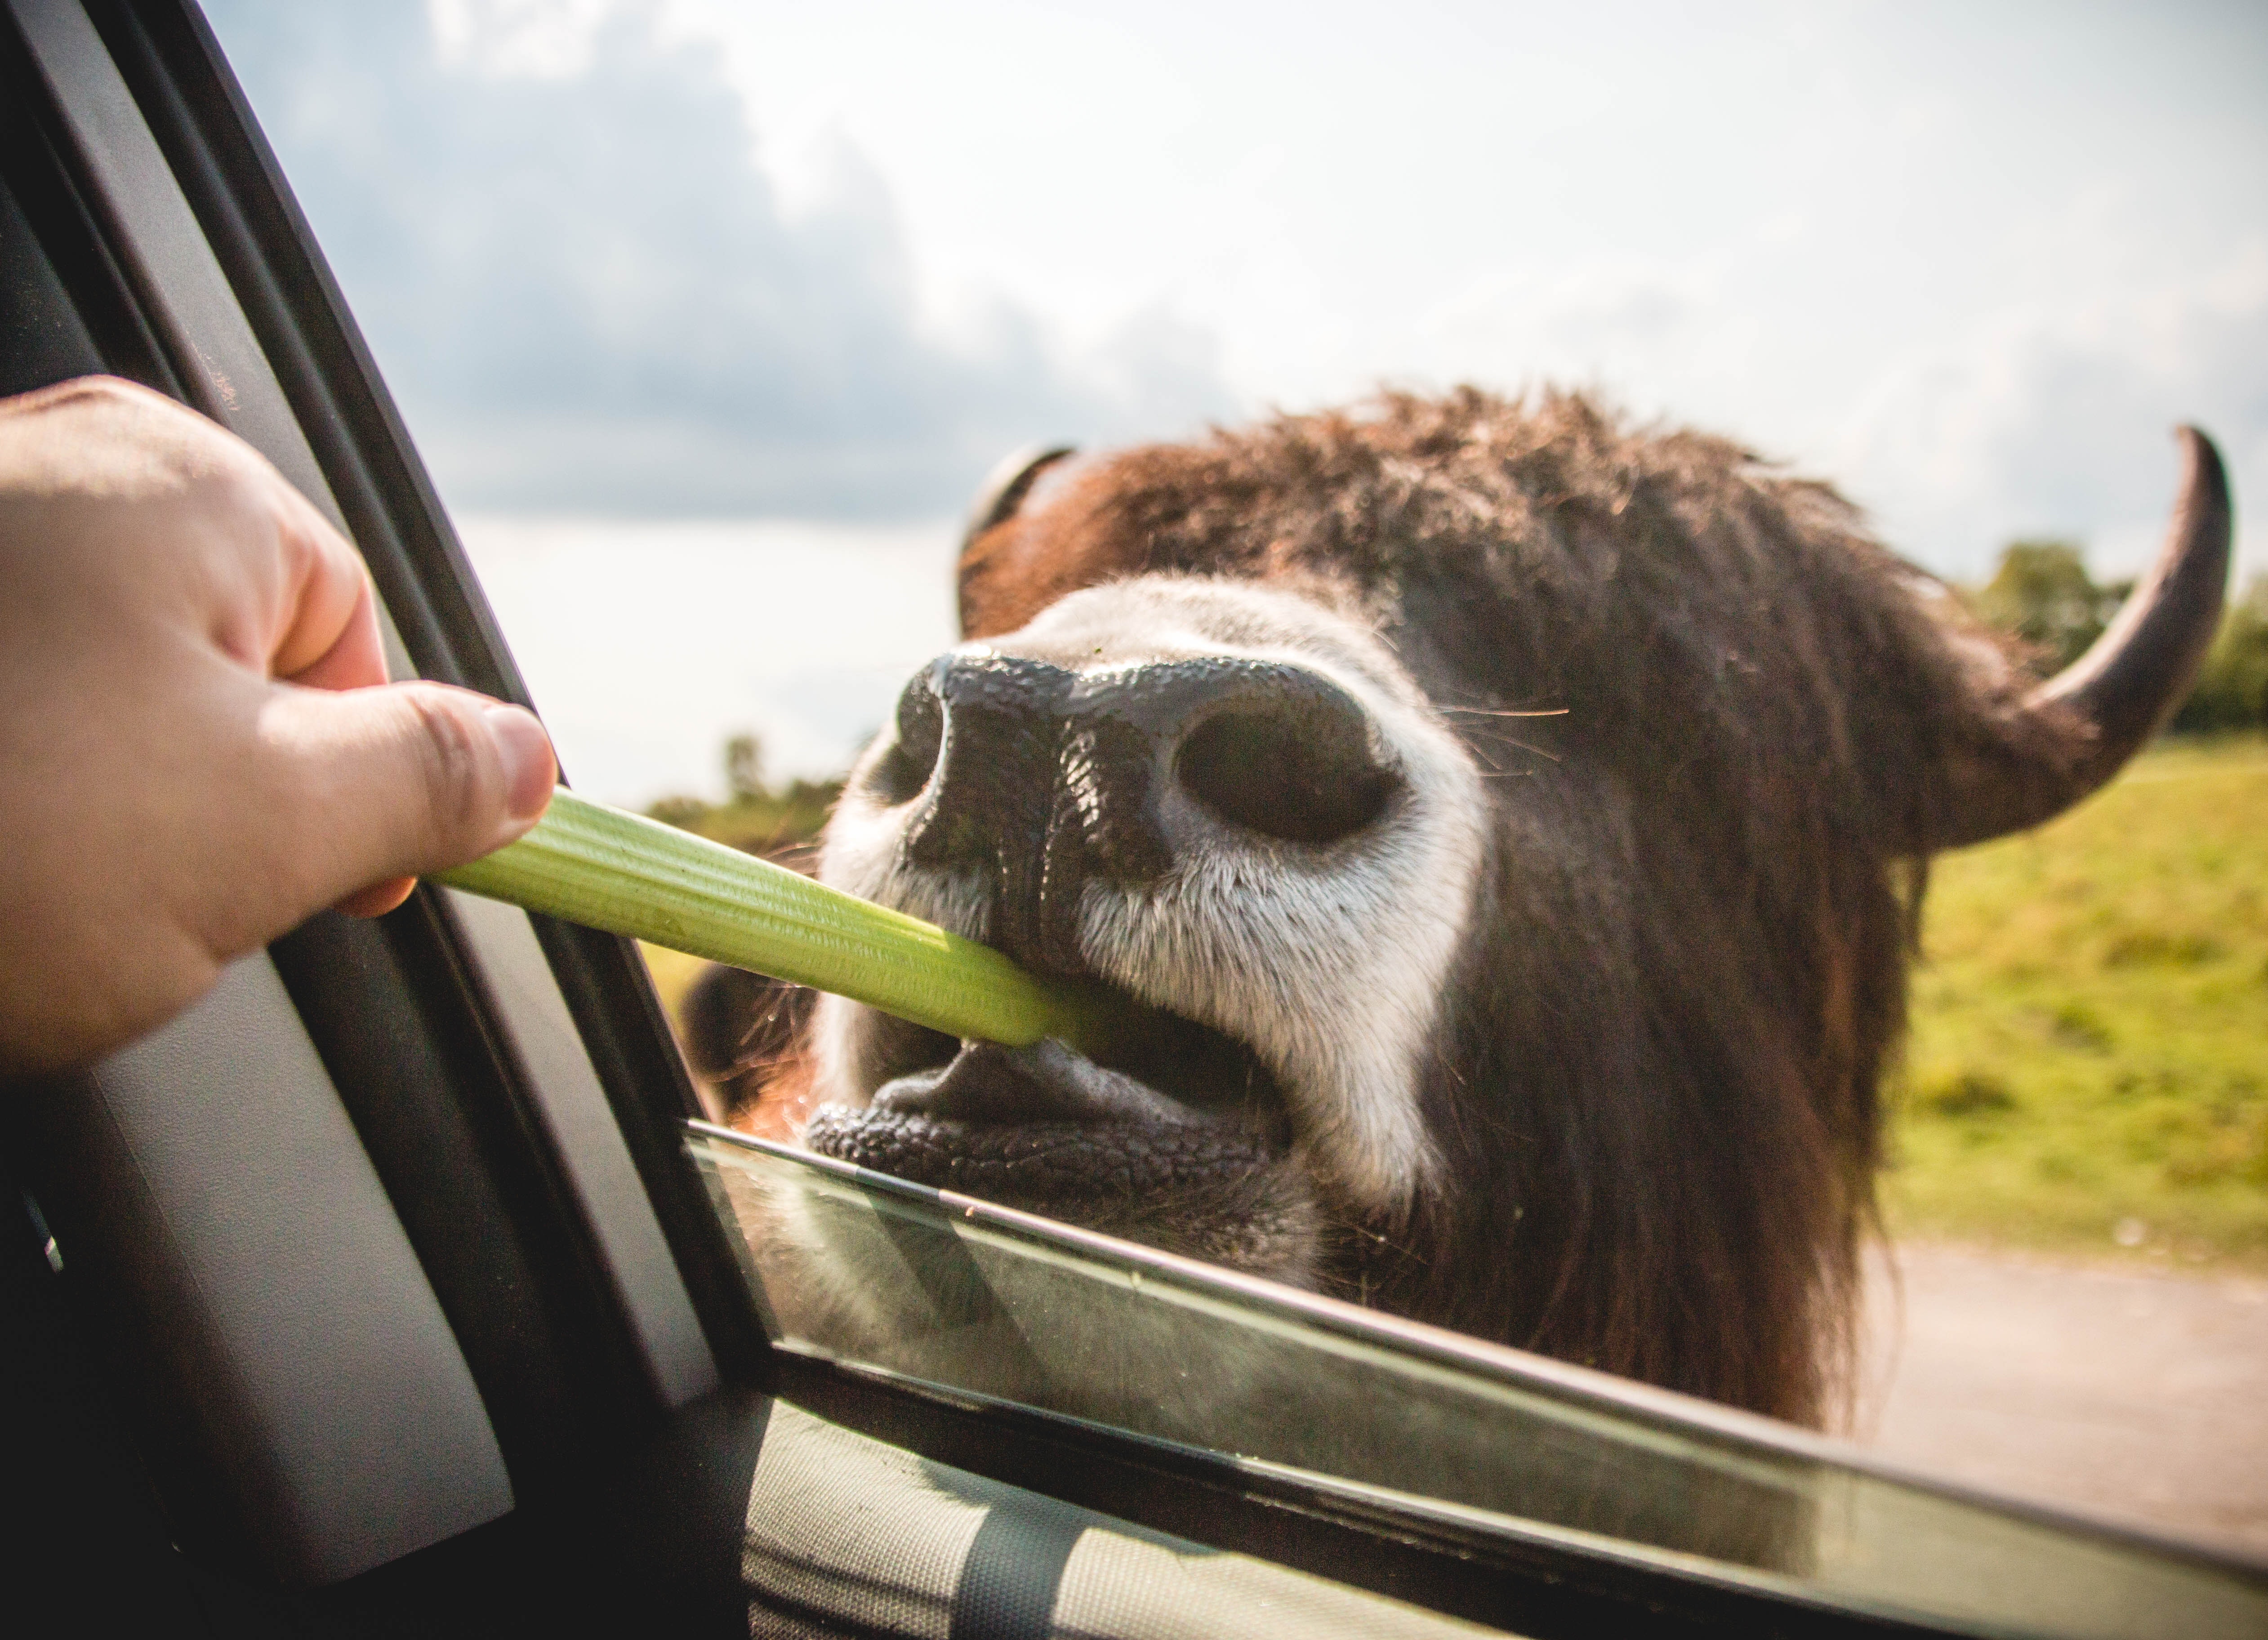 Person feeding vegetable on brown animal photo